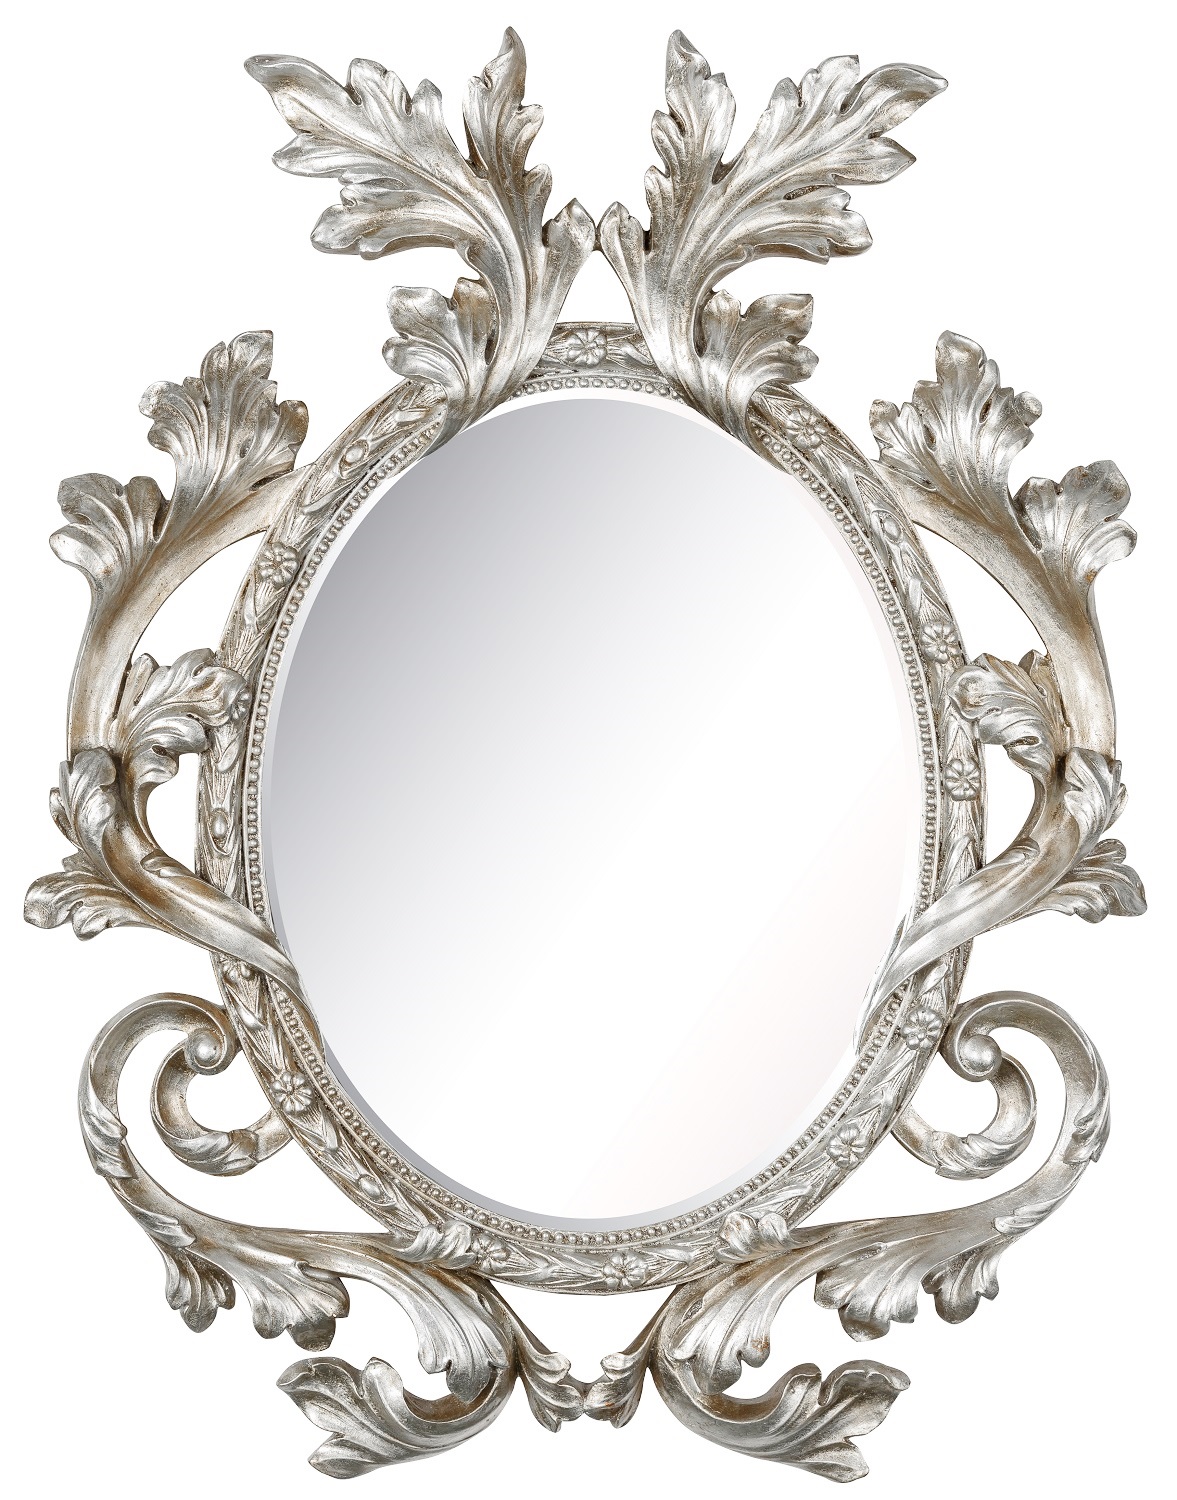 Купить зеркало настенное в спб. Зеркало Комби рама серебро. Зеркало настенное. Красивые зеркала. Красивое настенное зеркало.